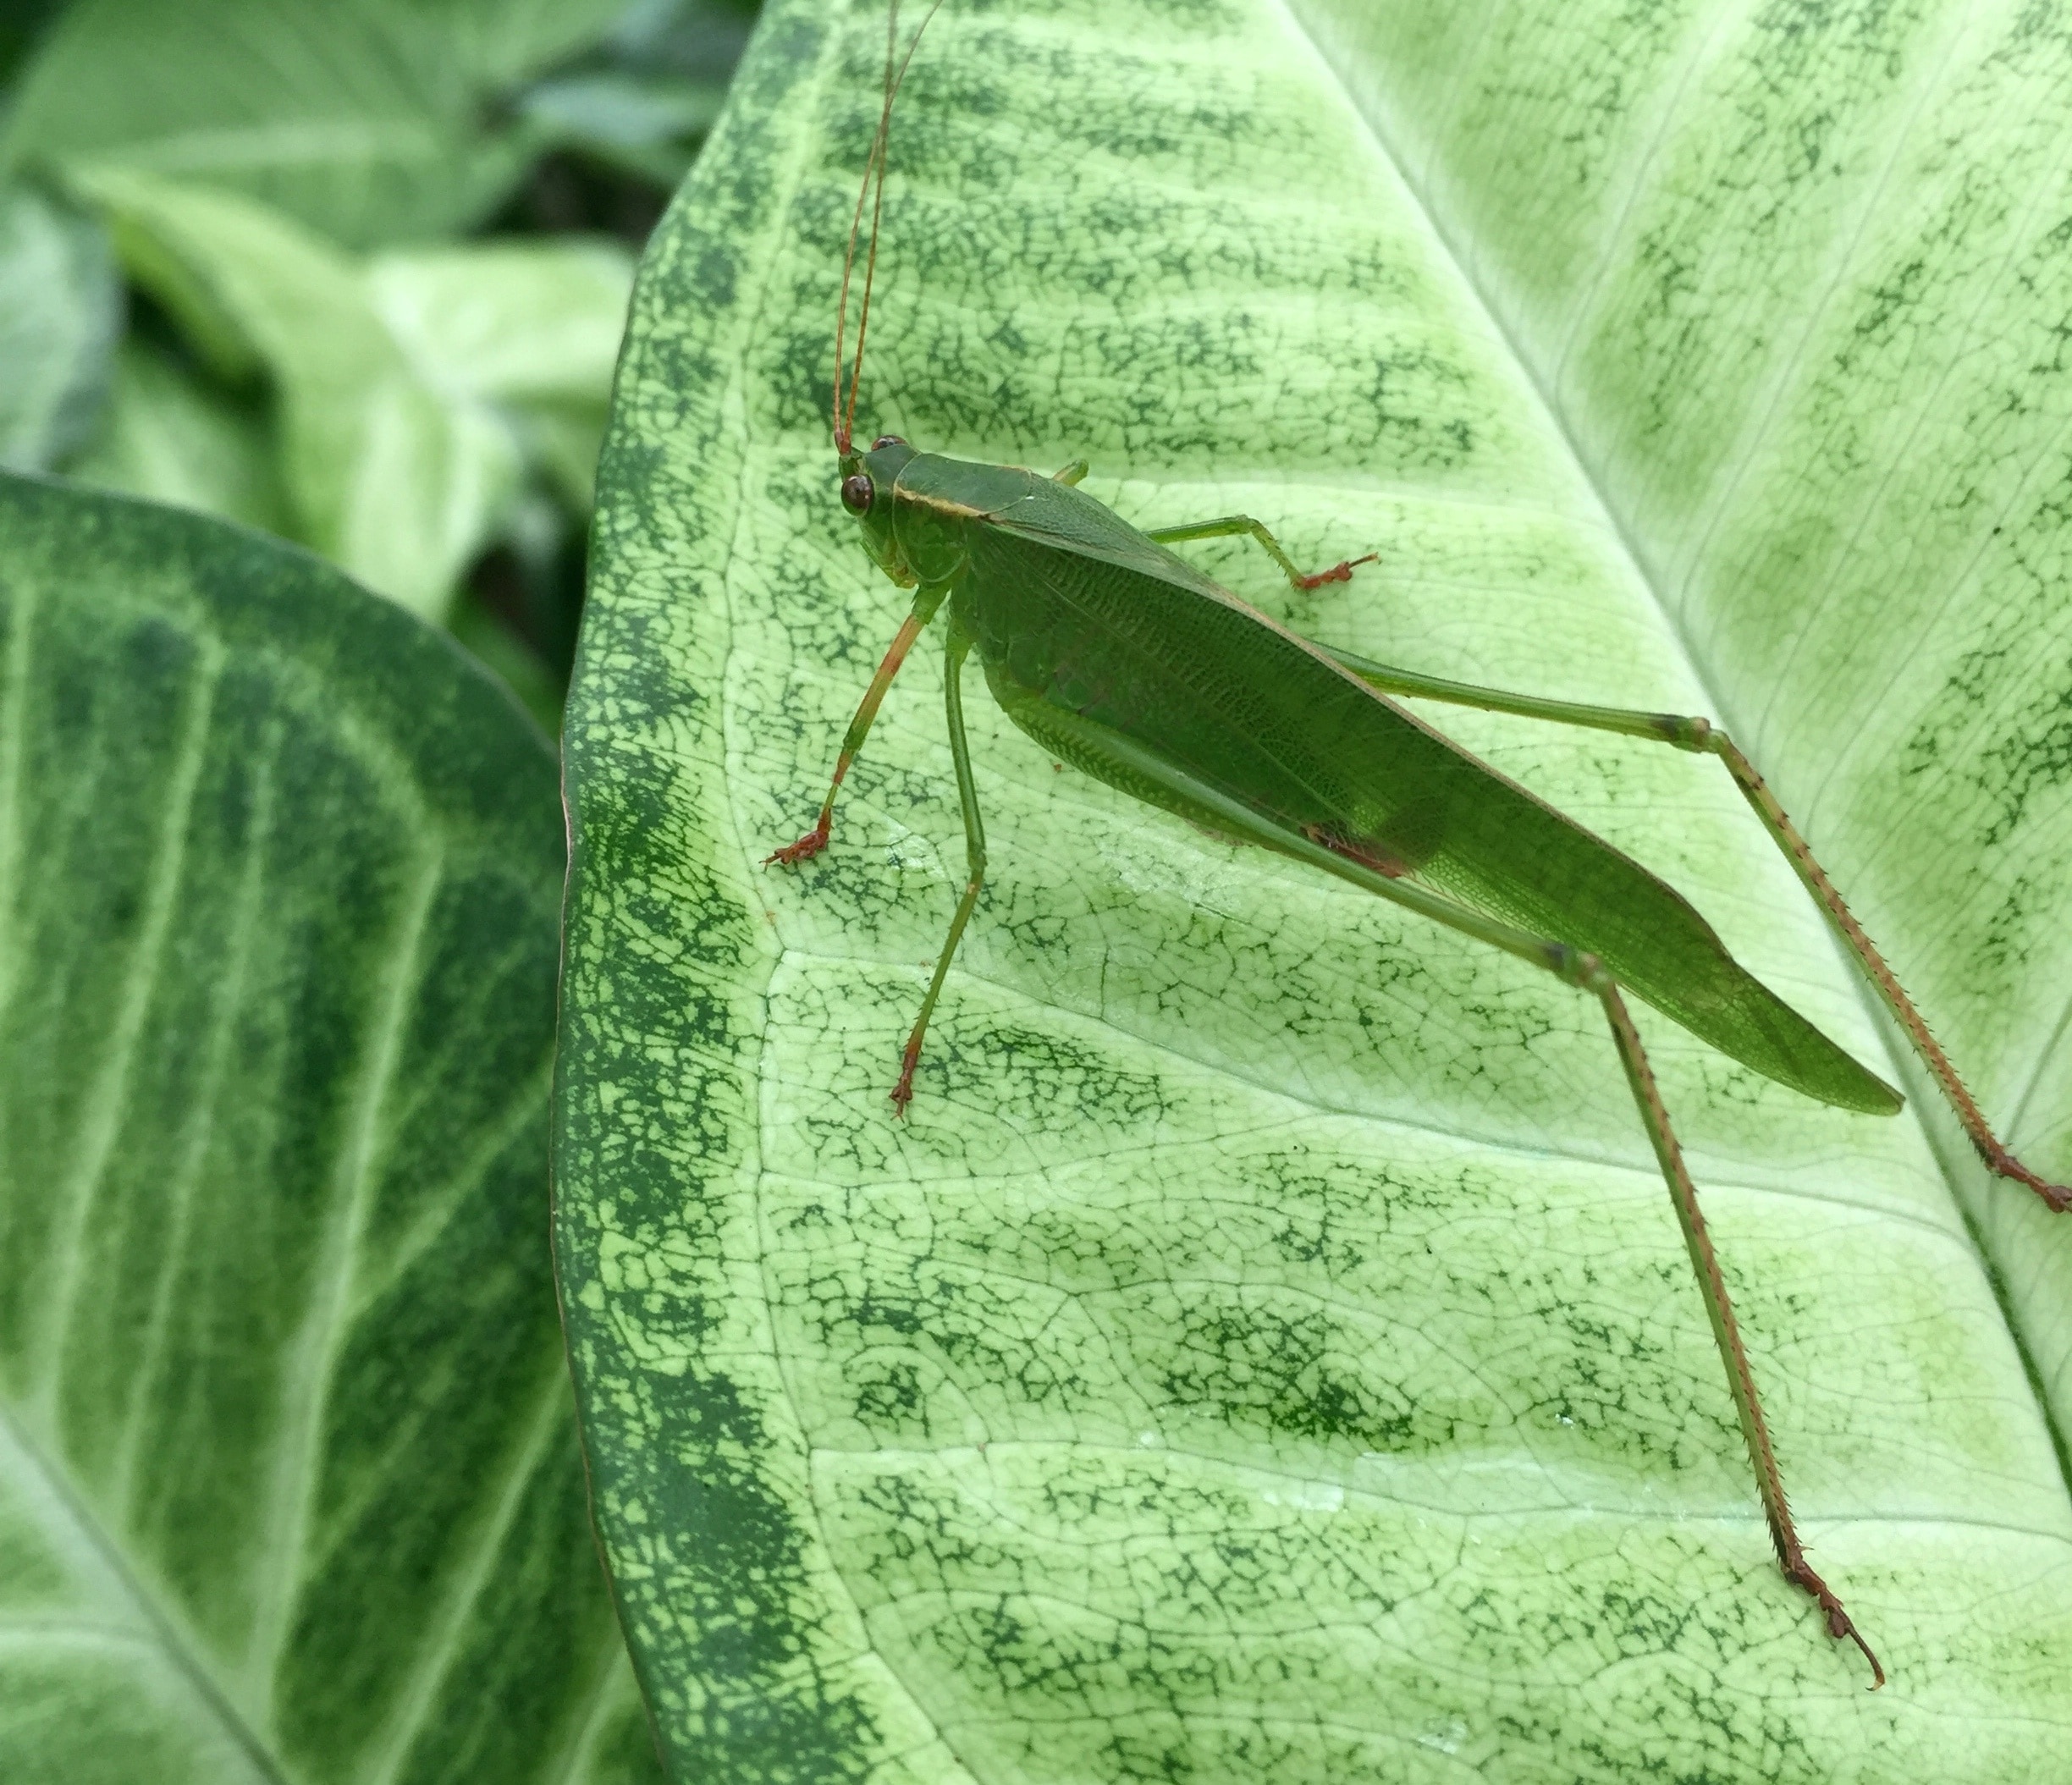 Leaves, Insect, Bug, Grasshopper, Green, leaf, green color